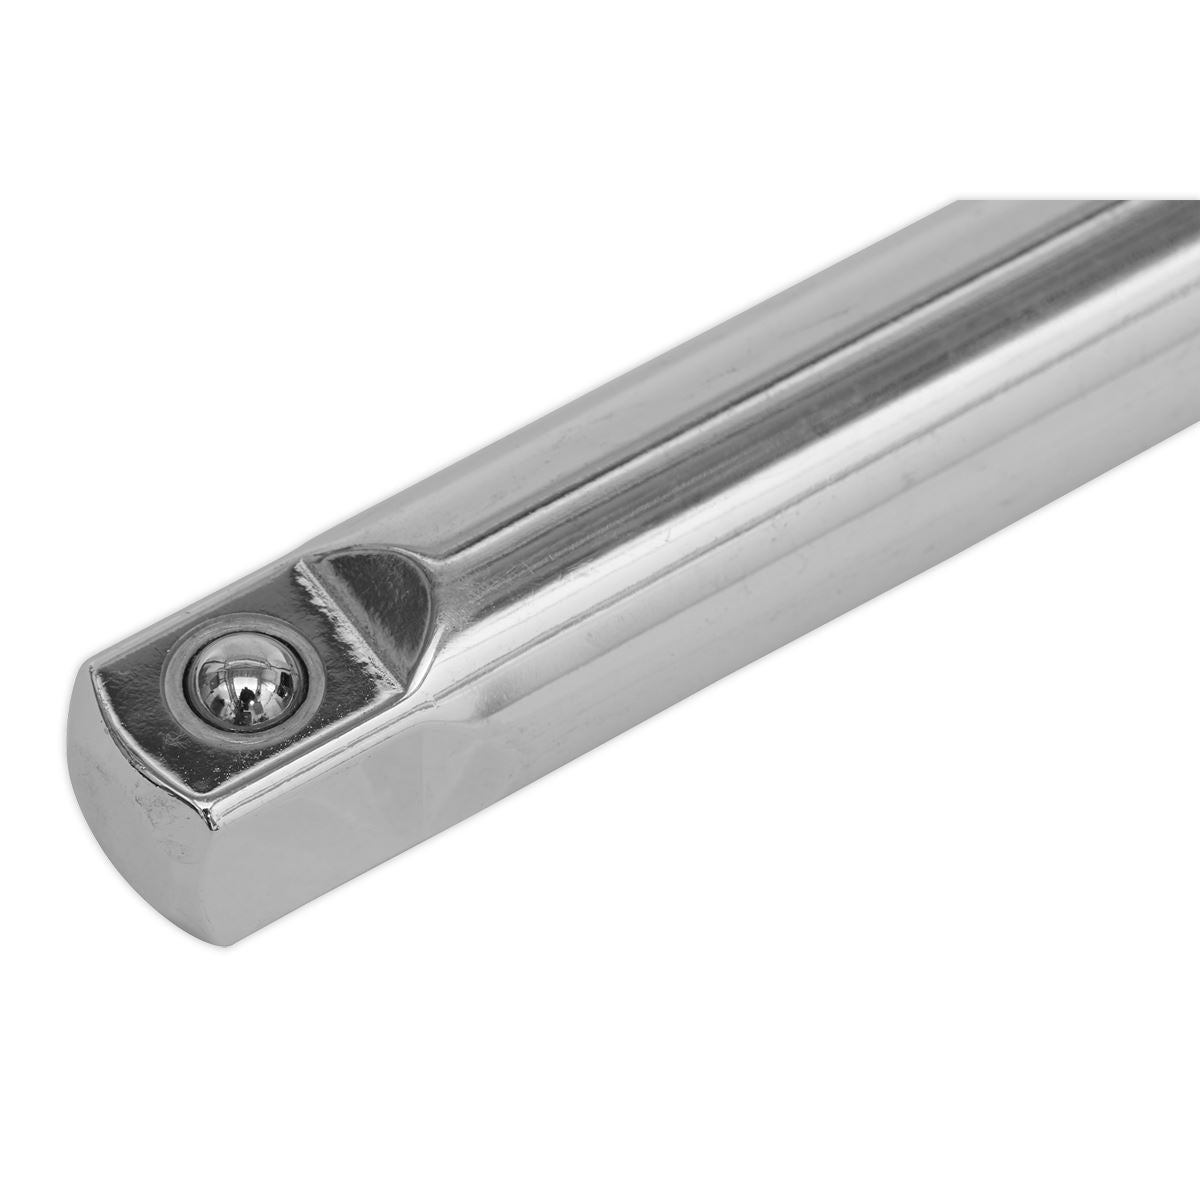 Sealey Premier Extension Bar 150mm 3/8"Sq Drive